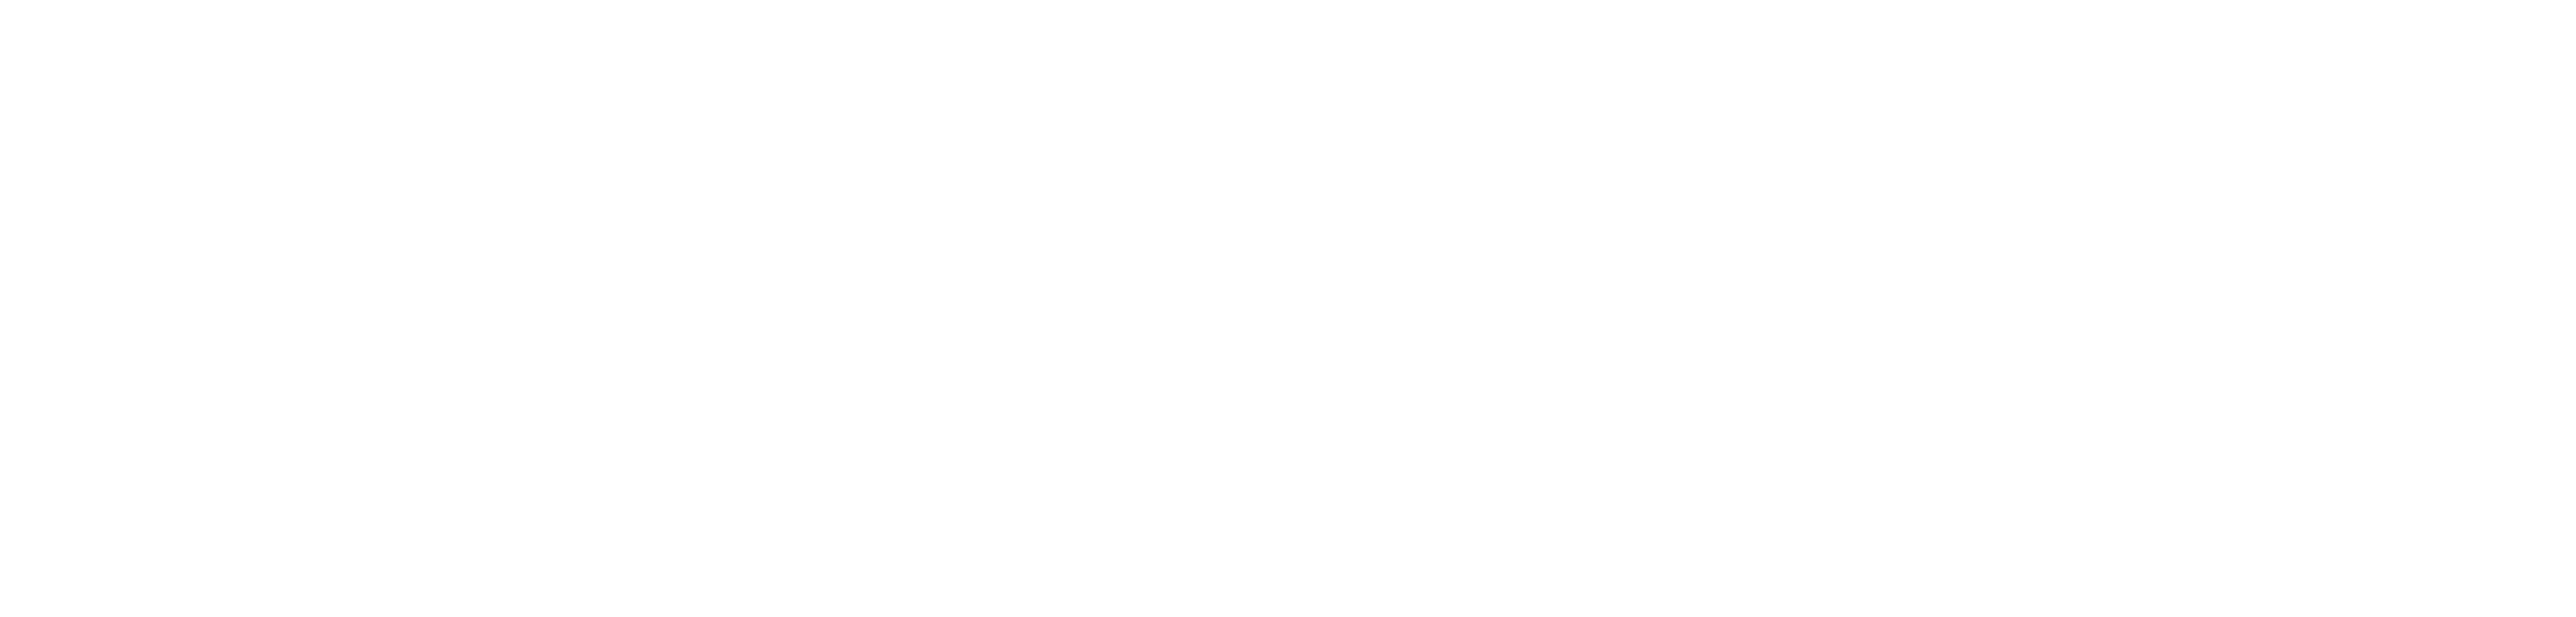 AVOXI + MS Teams Lockup-XL